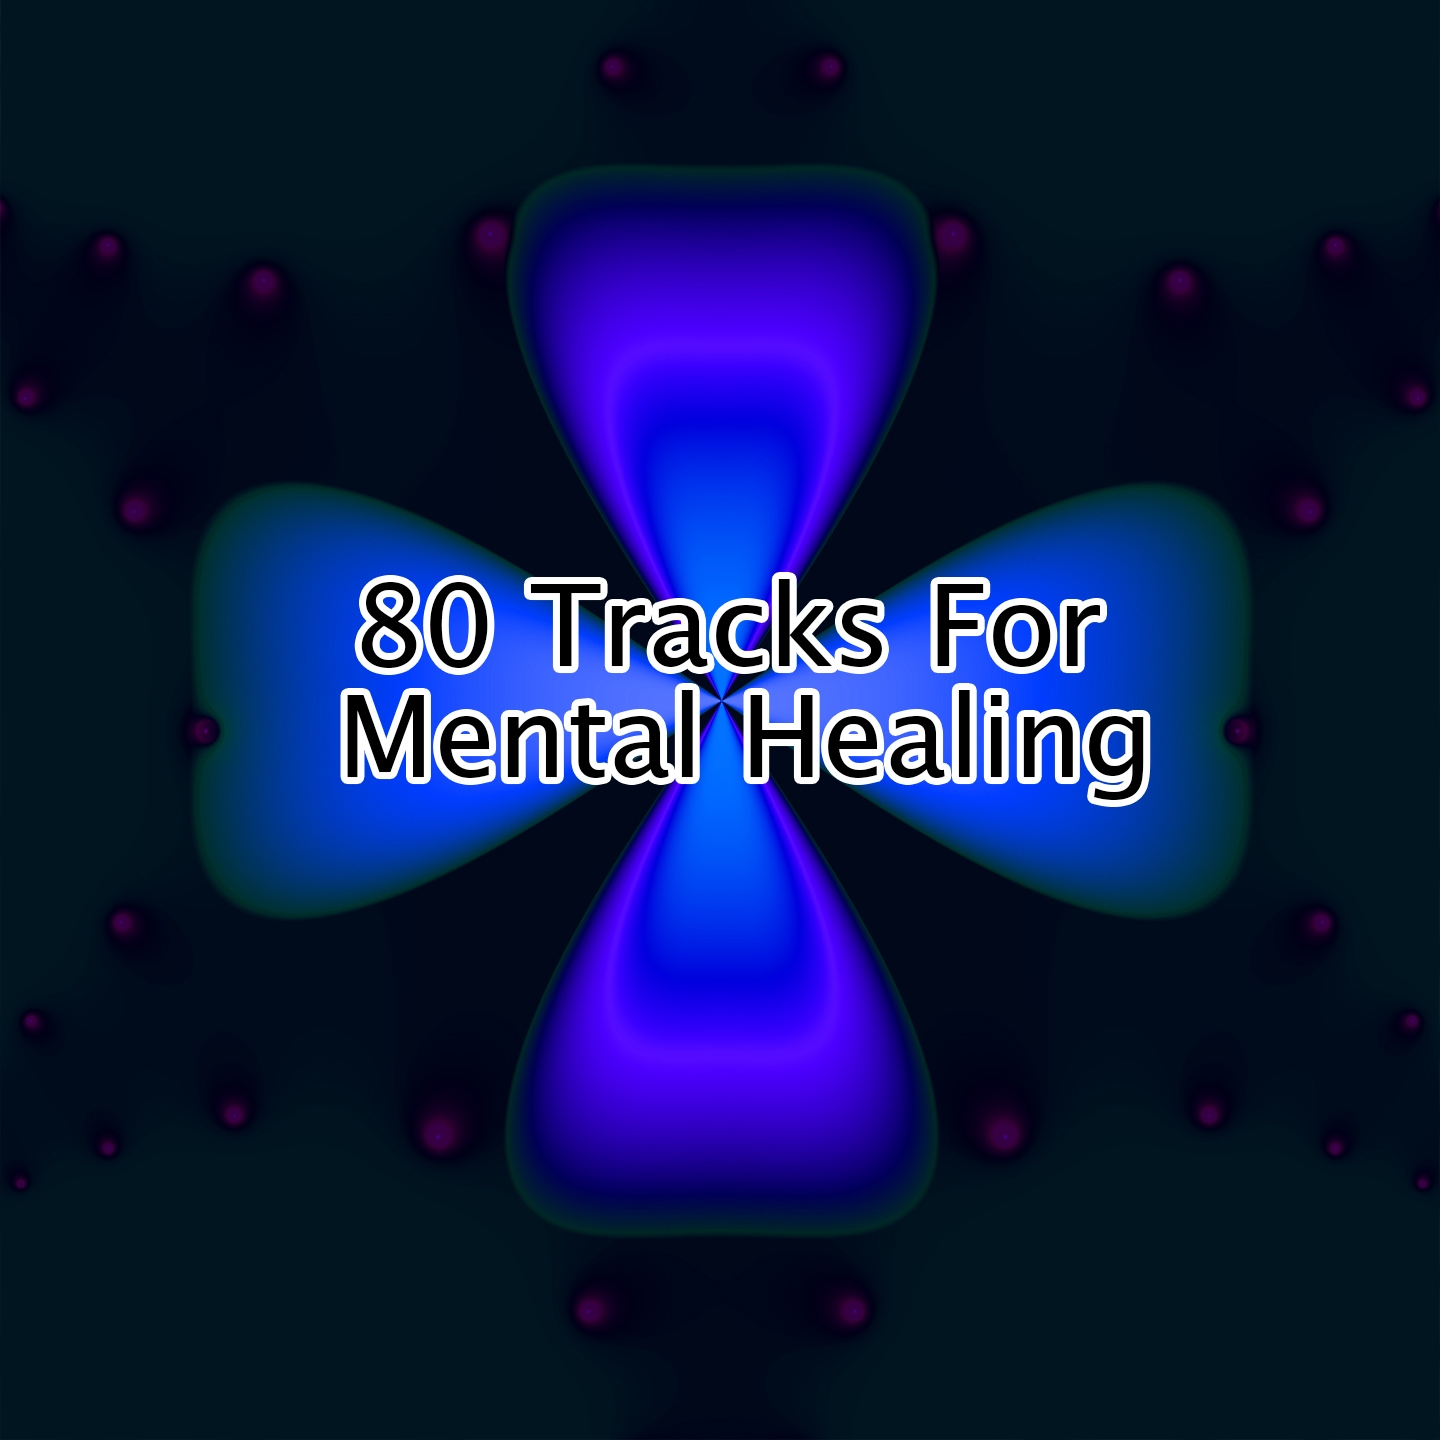 80 Tracks For Mental Healing